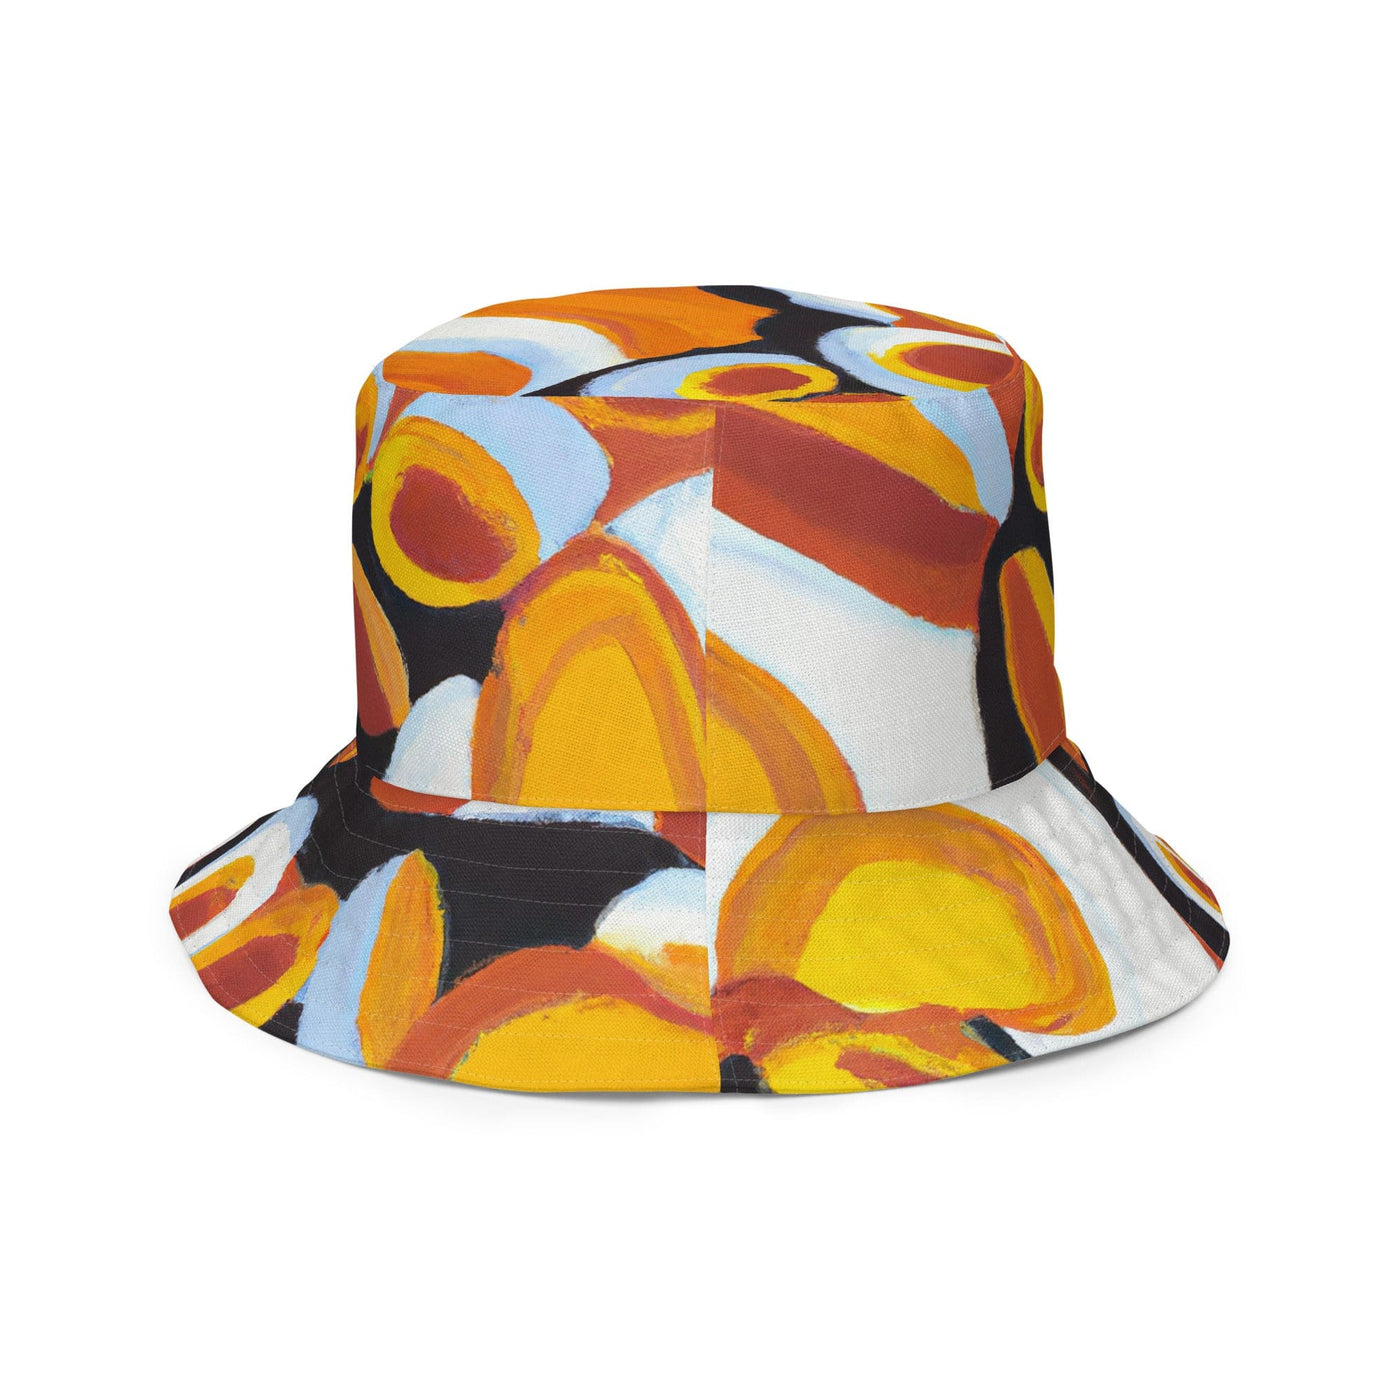 Reversible Bucket Hat Orange Black White Geometric Print Pattern - Unisex